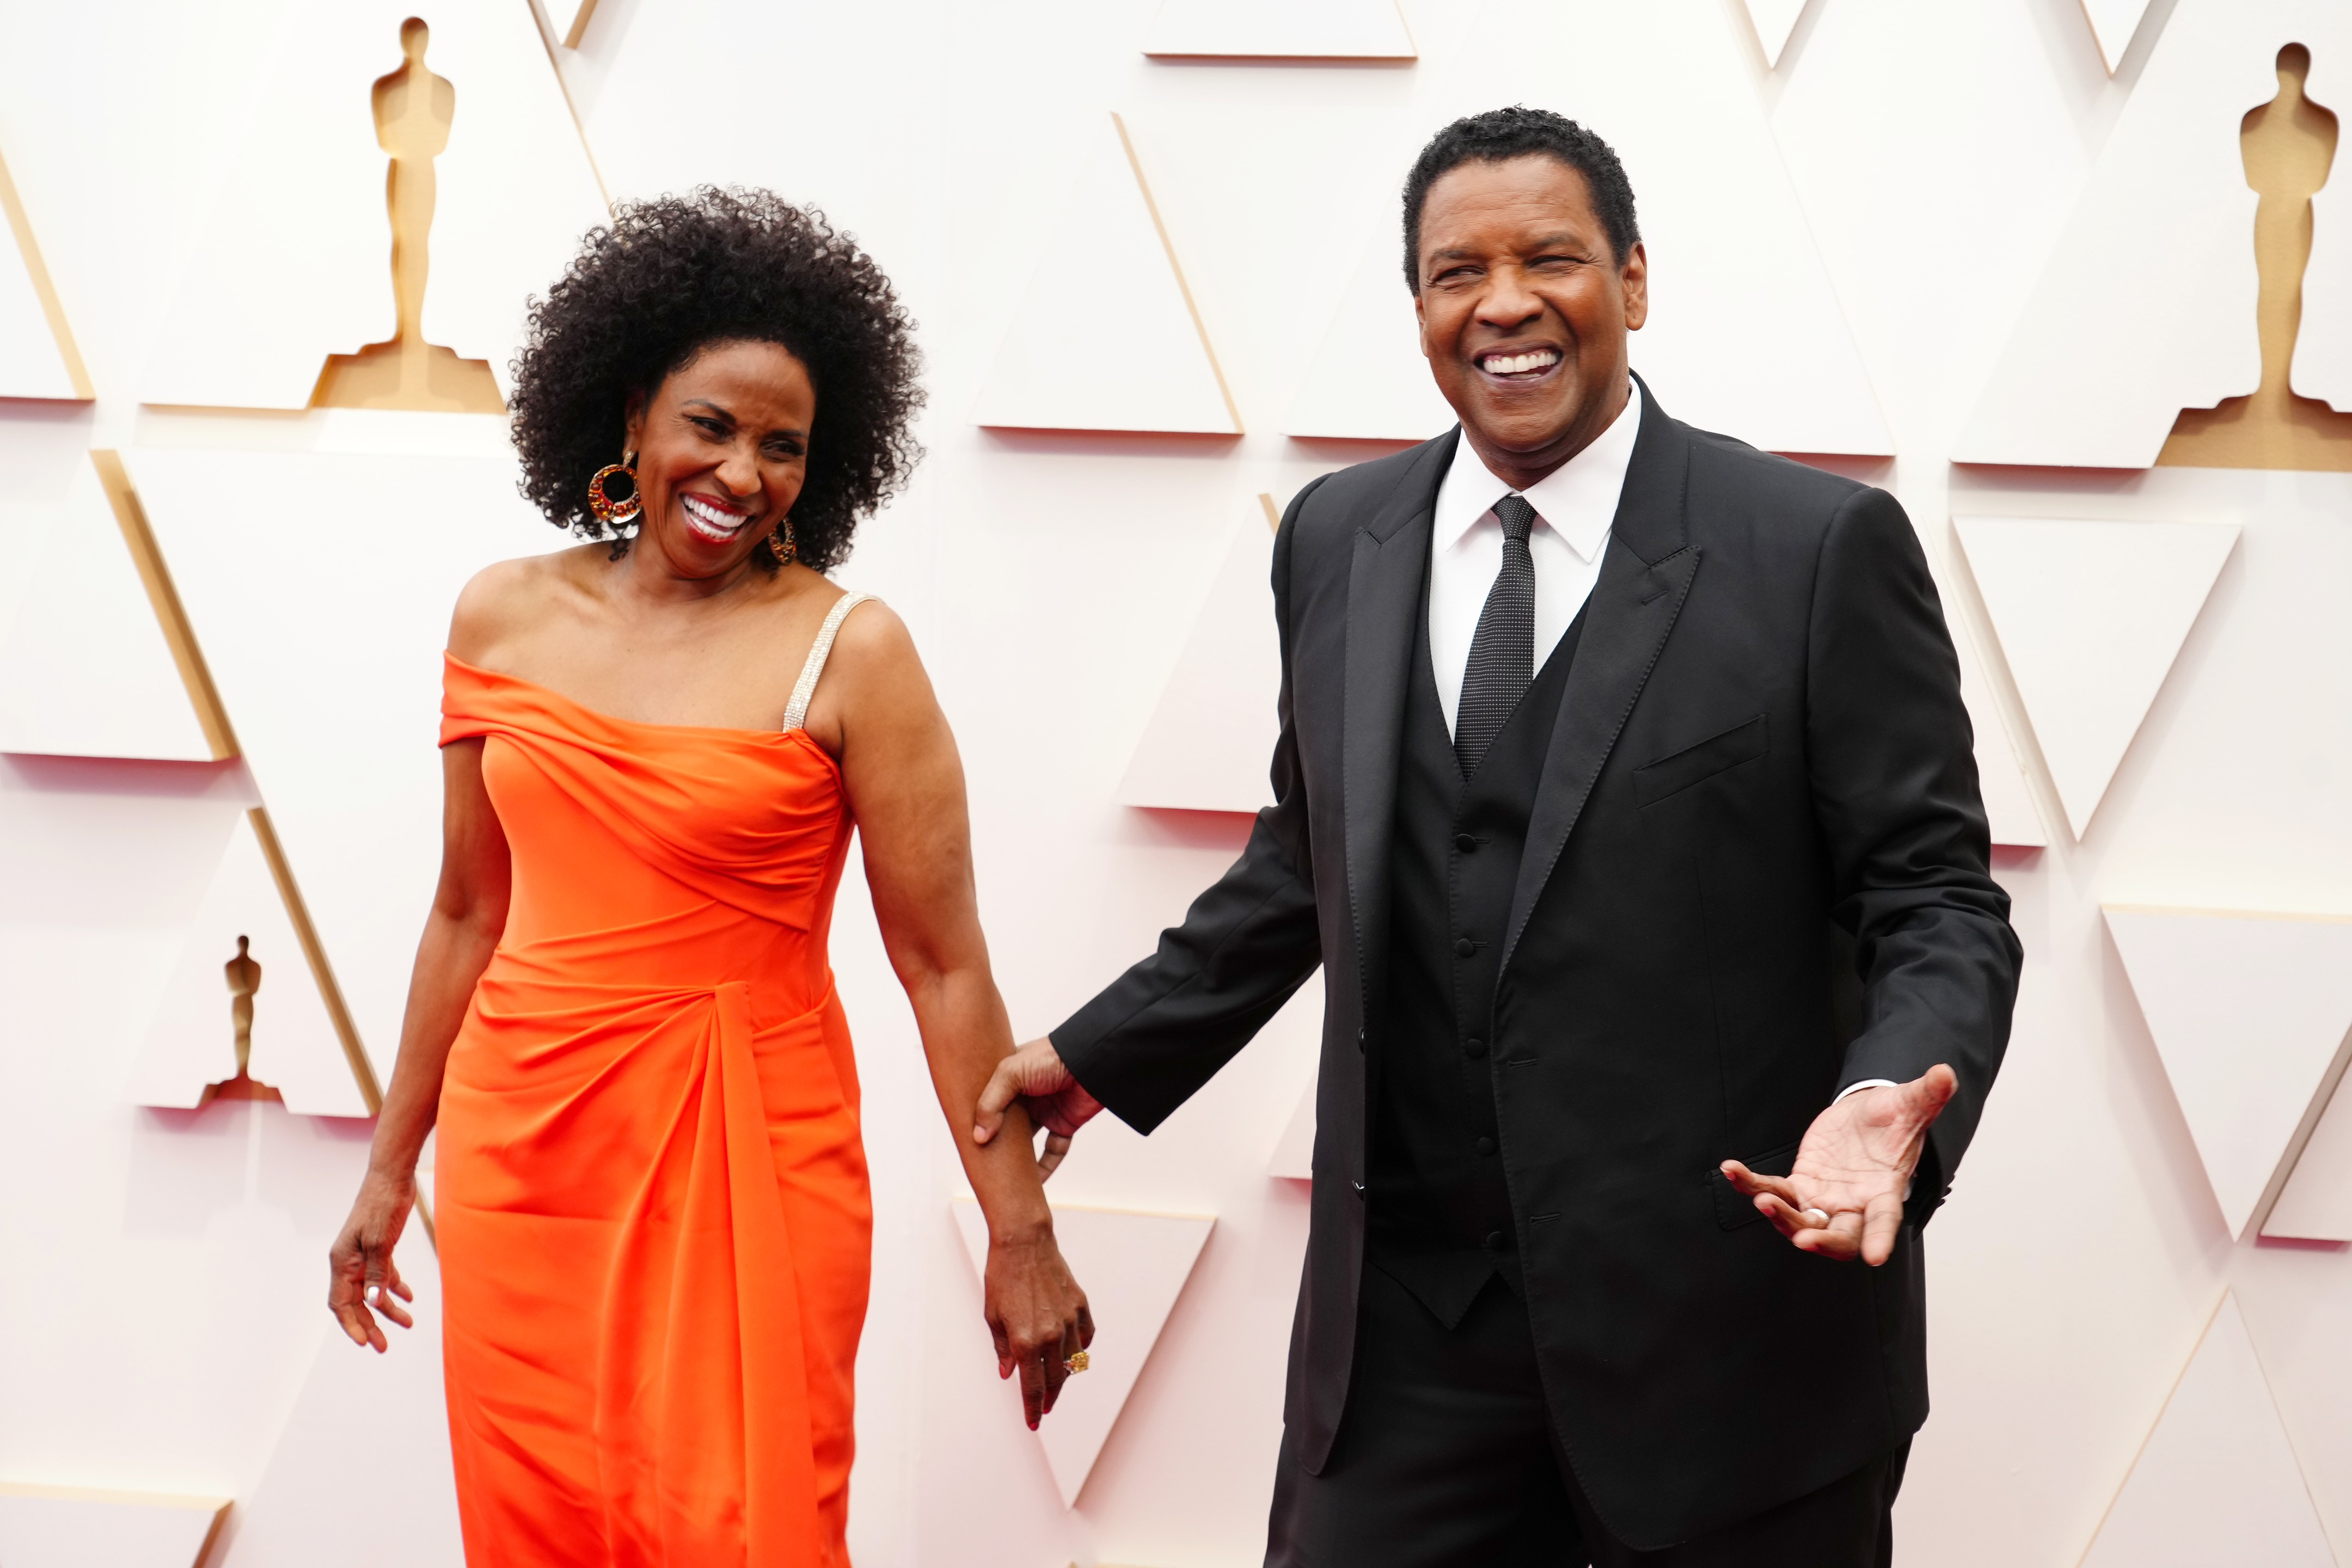 HOLLYWOOD, CALIFORNIA - MARCH 27: (L-R) Pauletta Washington and Denzel Washington attend the 94th Annual Academy Awards at Hollywood and Highland on March 27, 2022 in Hollywood, California. (Photo by Jeff Kravitz/FilmMagic) (Foto: FilmMagic)